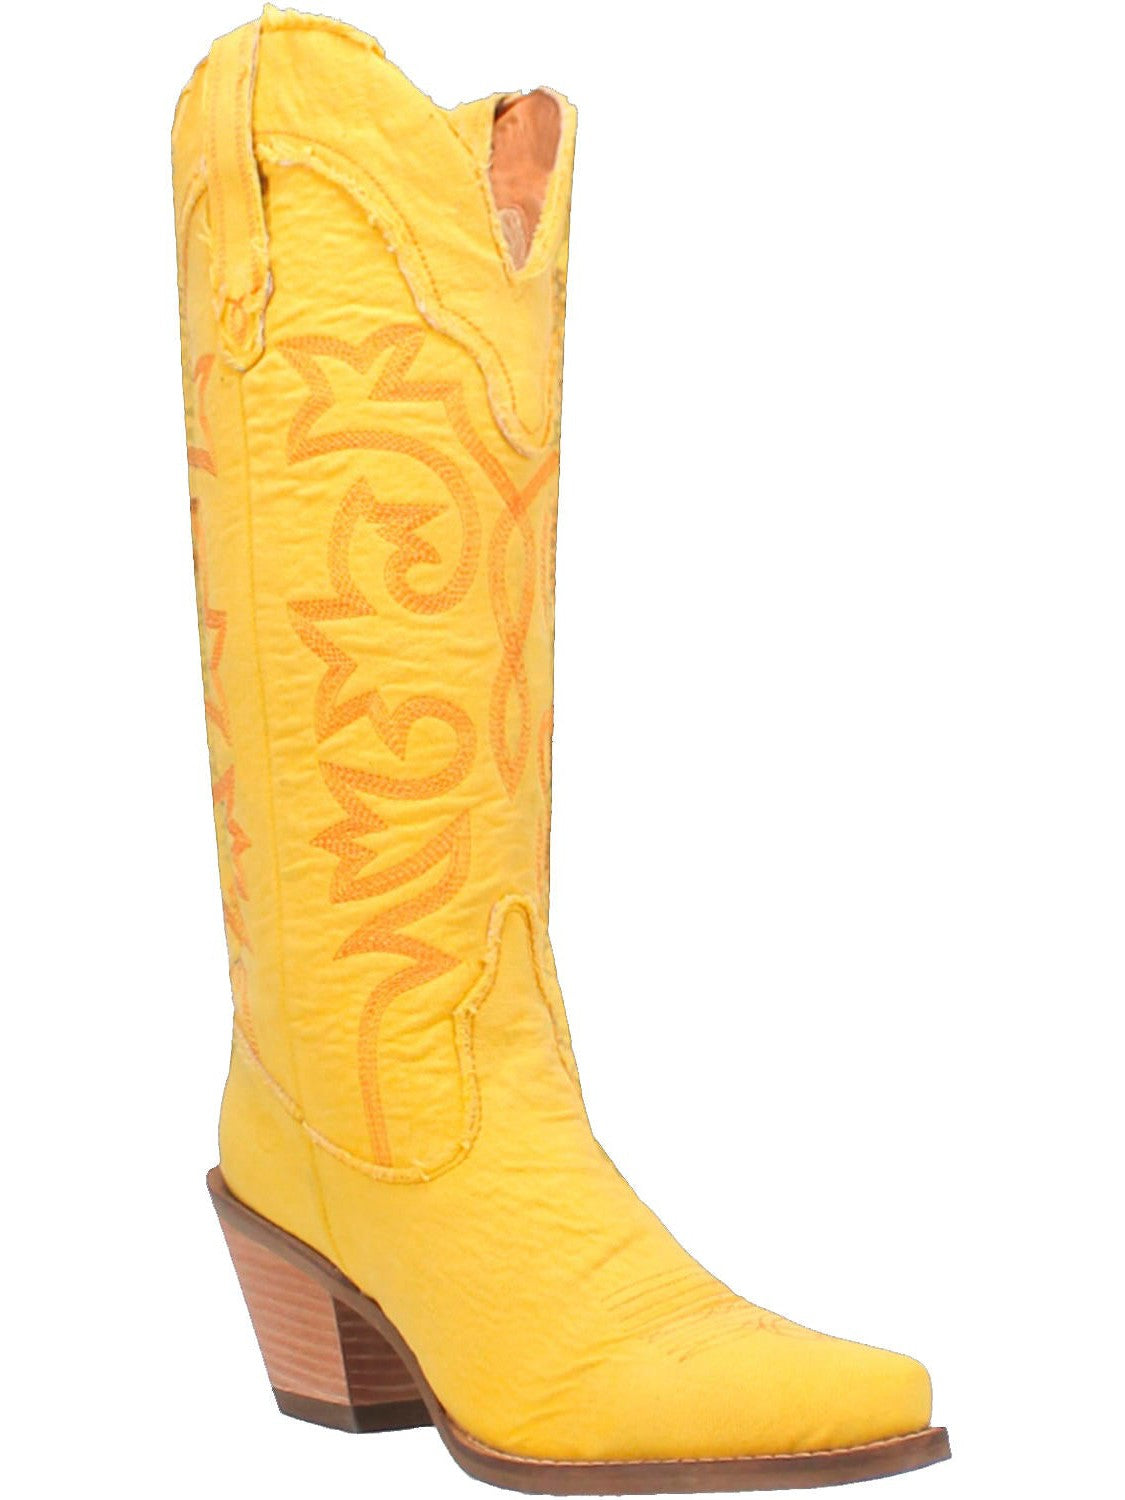 Texas Tornado Denim Boot by Dingo - Yellow